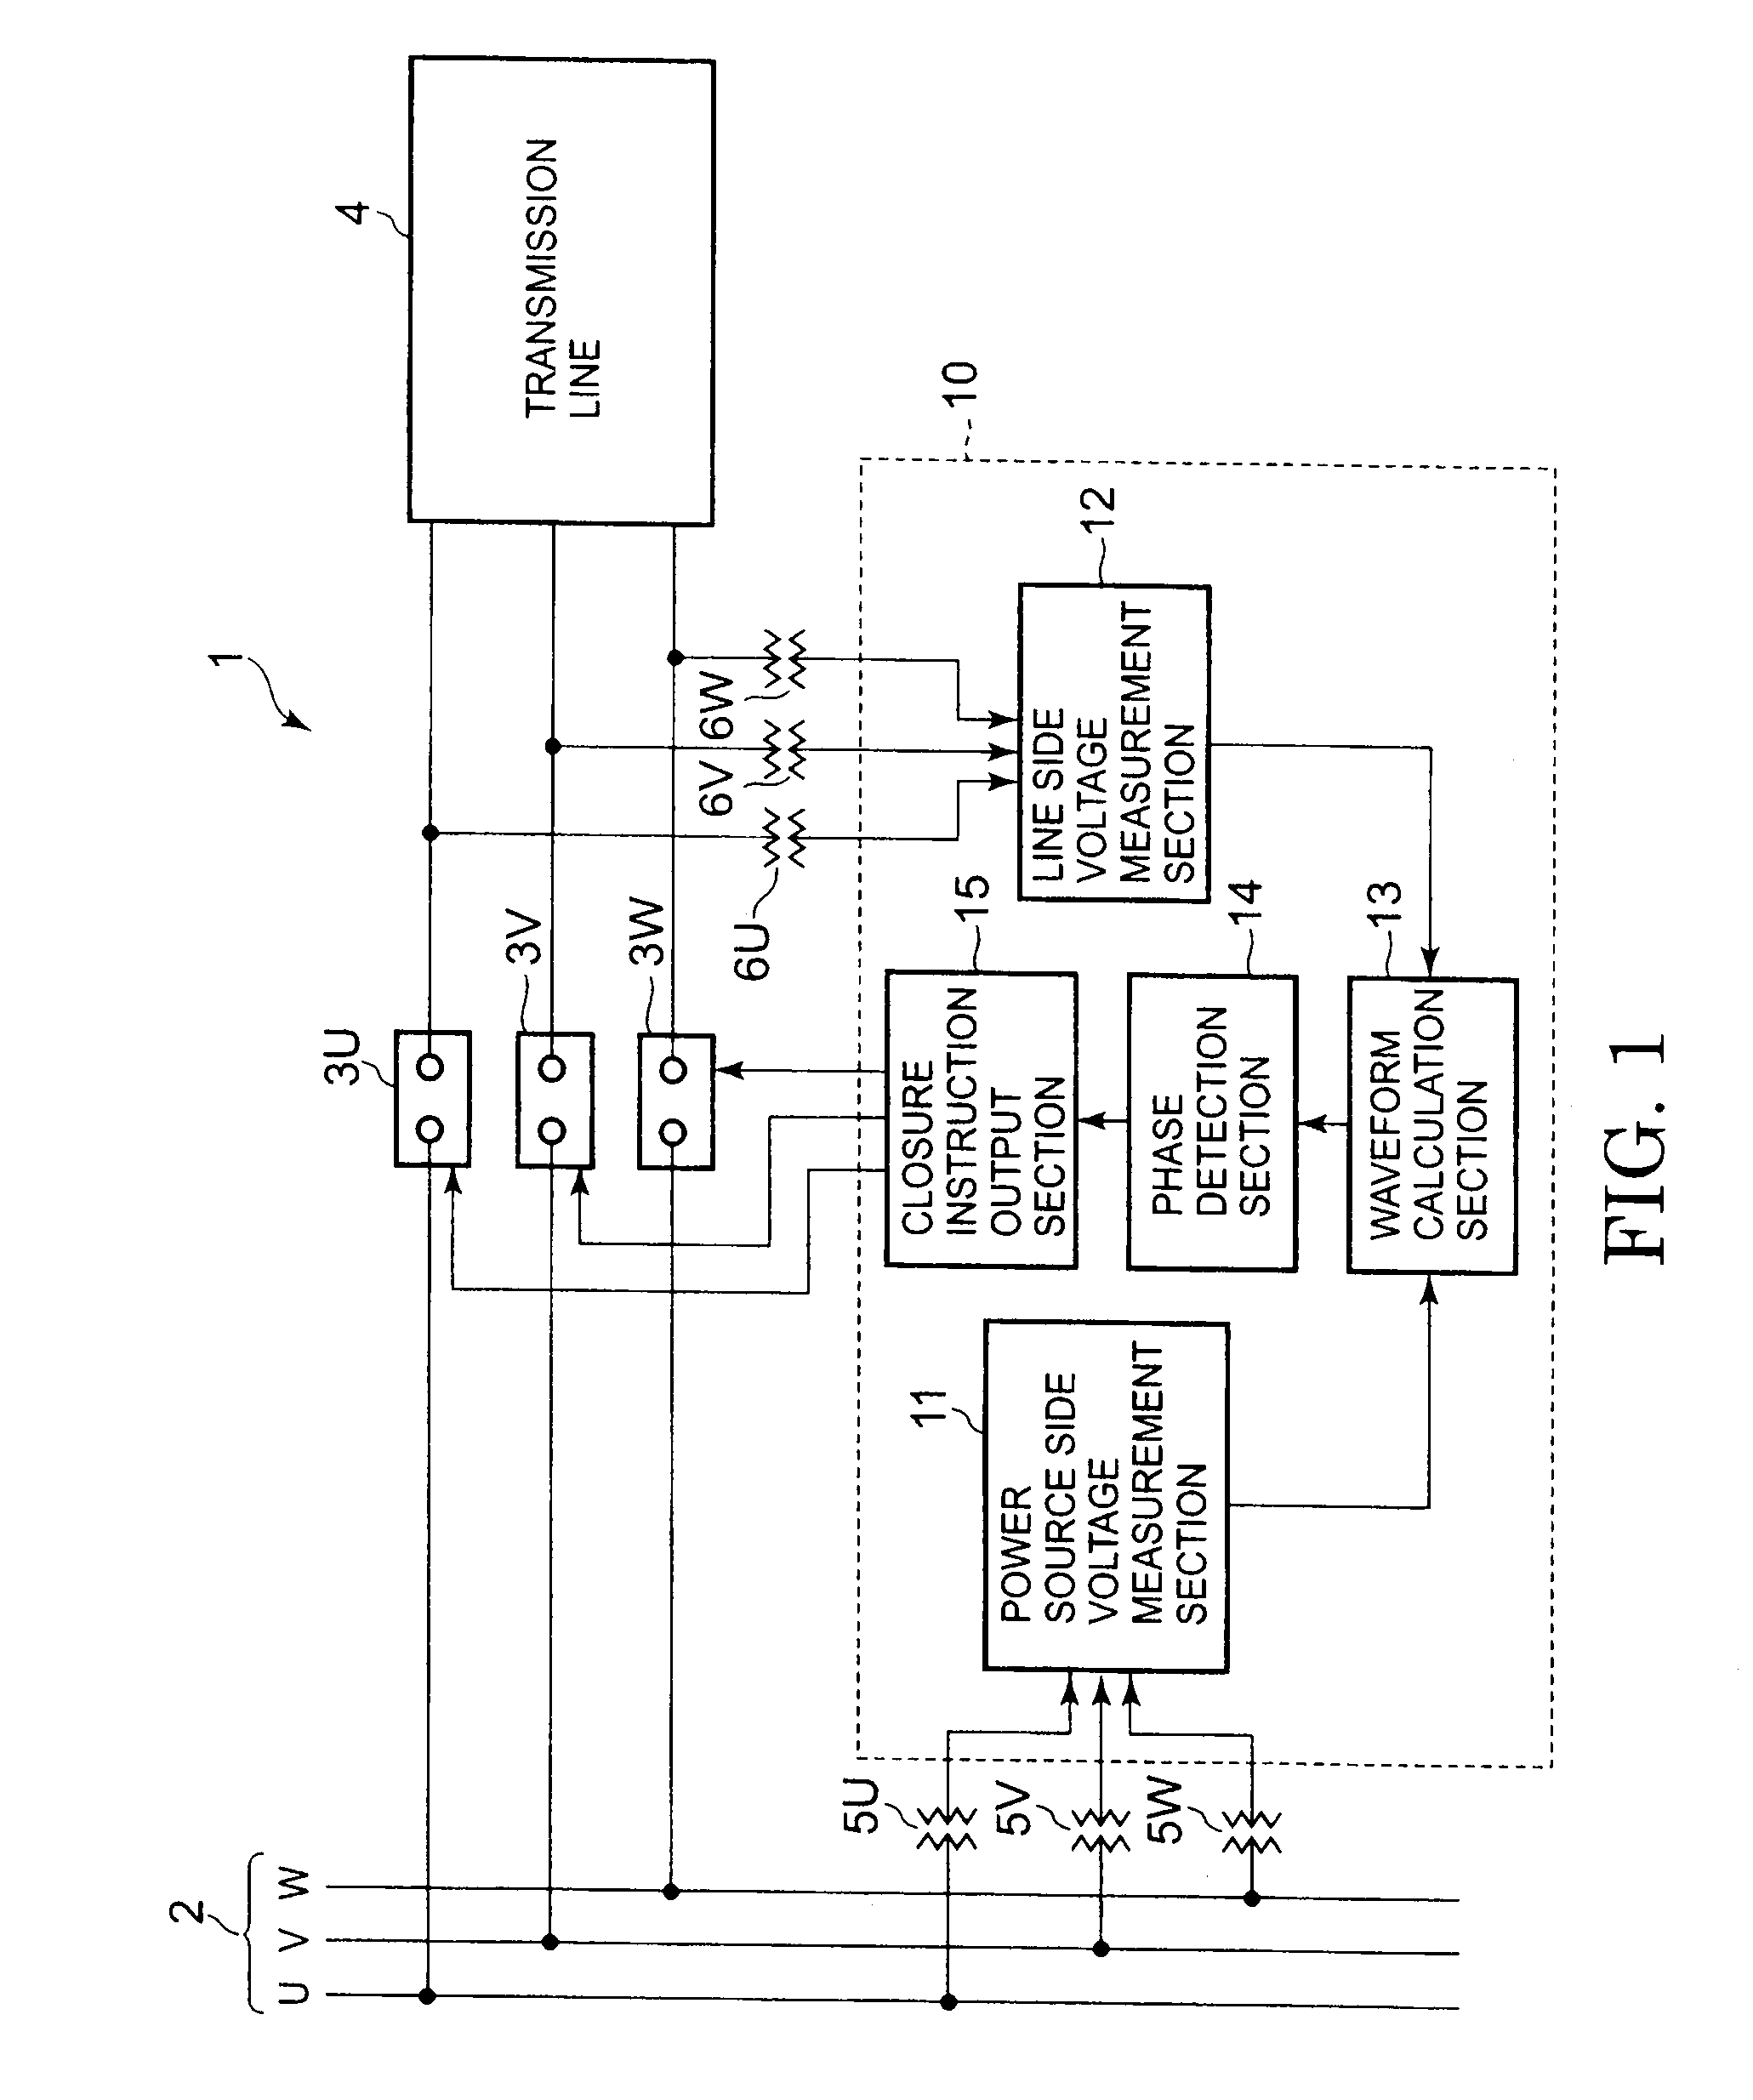 Over-voltage suppression apparatus